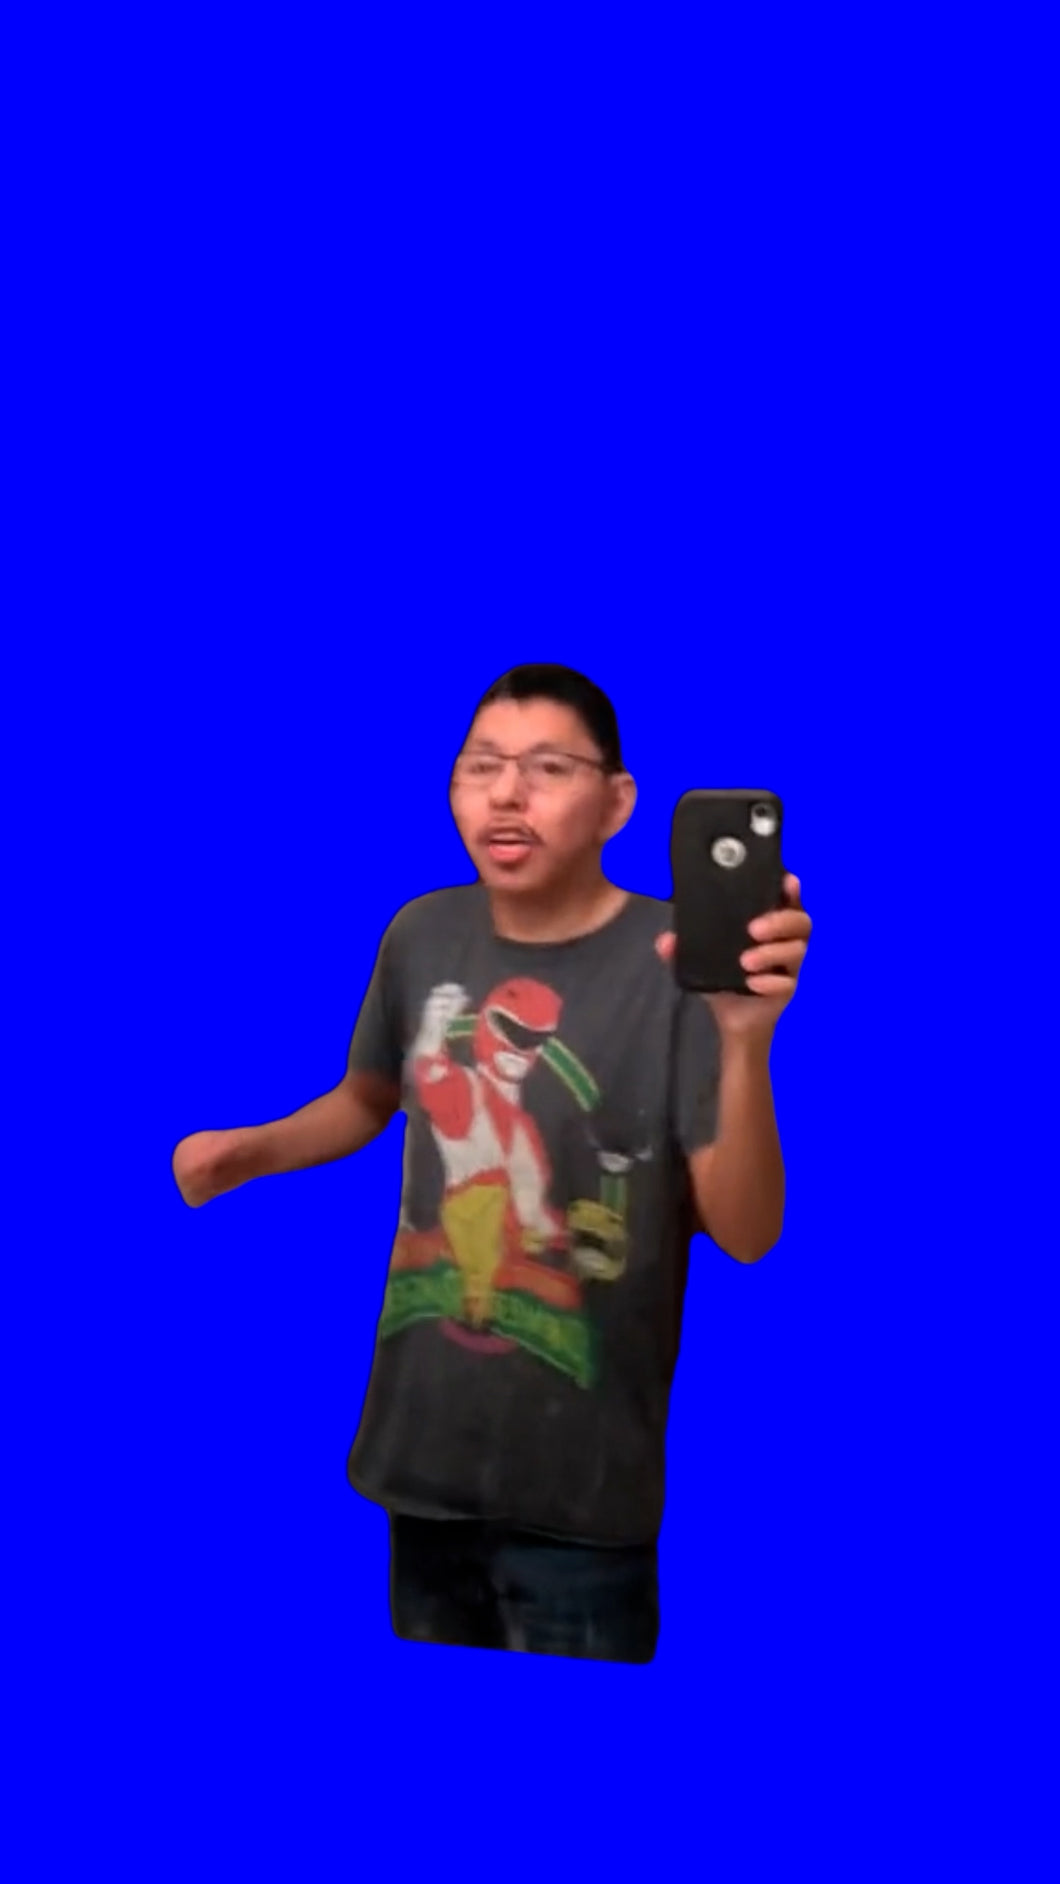 Guy Dancing In Front Of Mirror (Blue Screen)